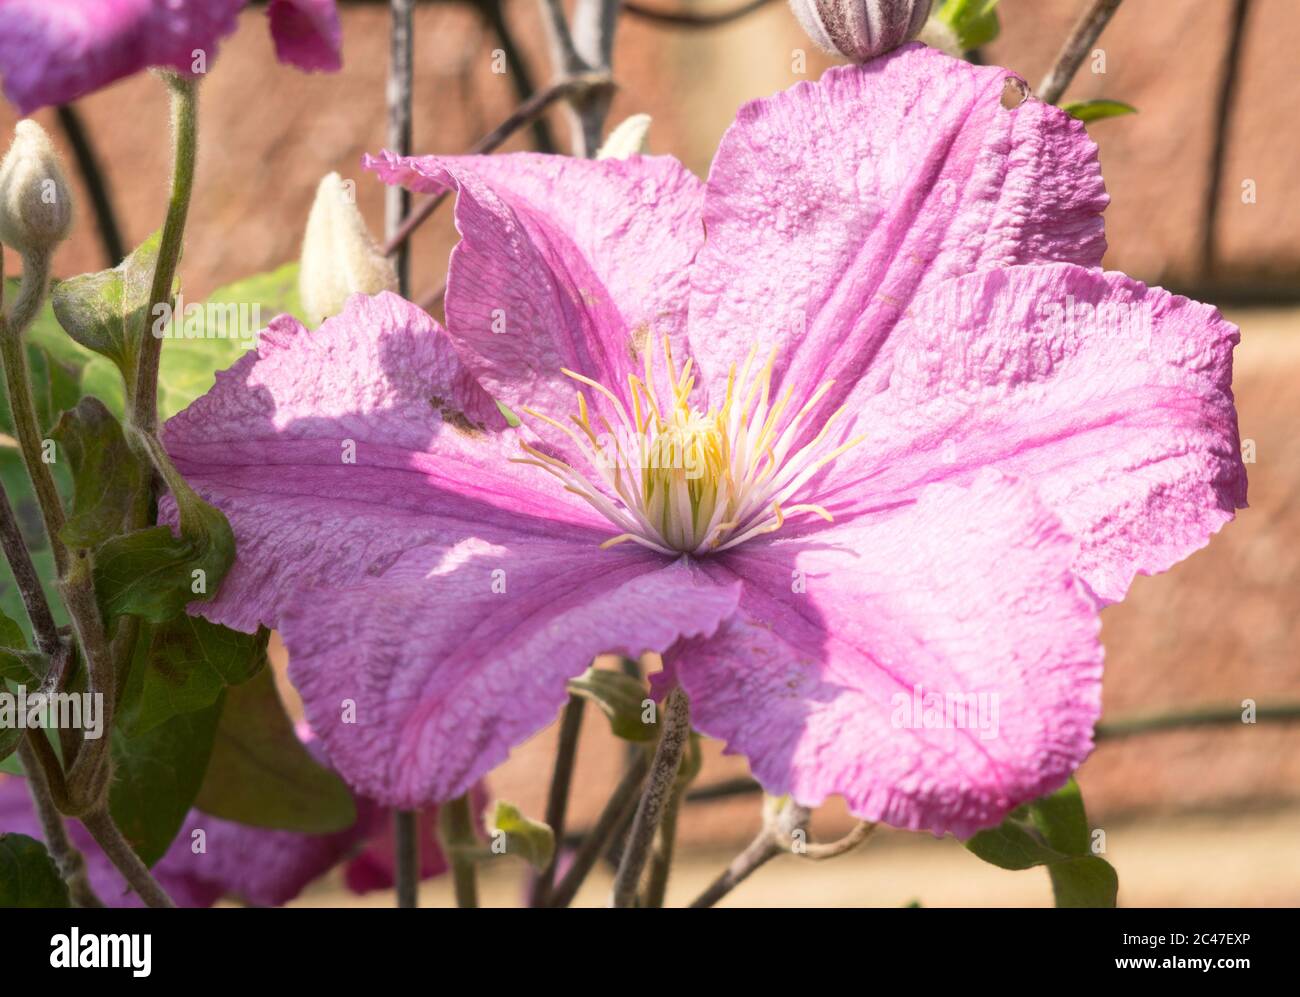 Nahaufnahme der rosa Clematis-Blütensorte Comtesse De Bouchard im Juni, England, Großbritannien Stockfoto